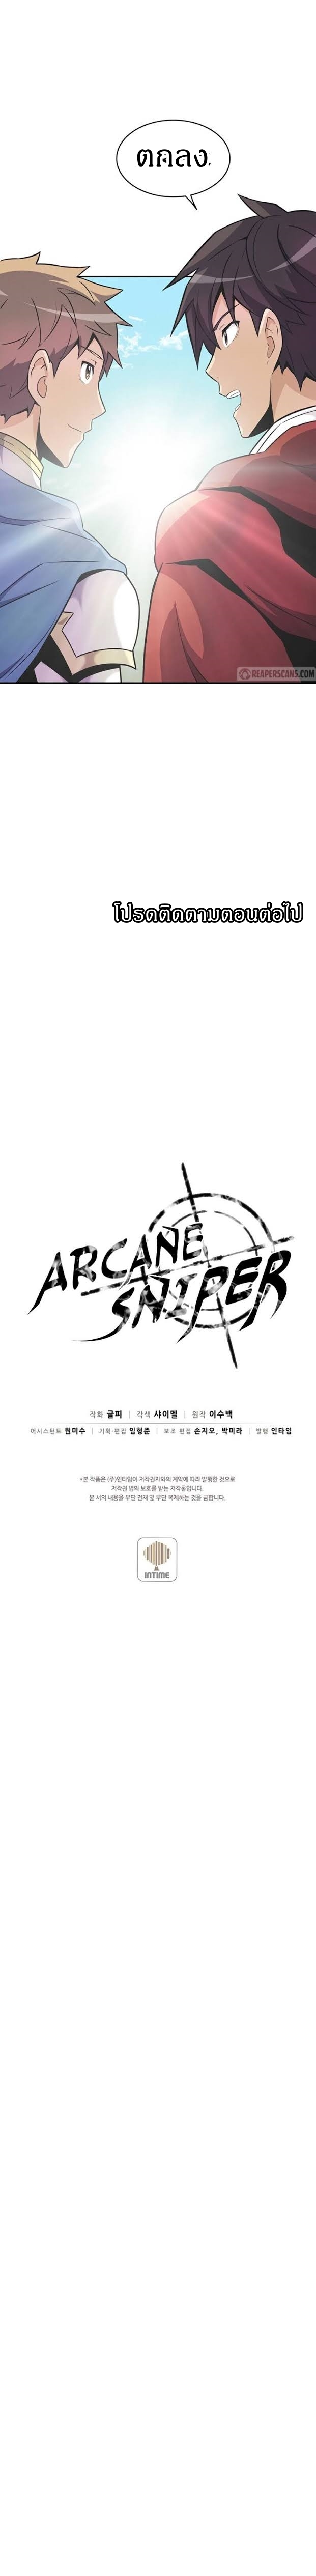 Arcane Sniper22 (14)